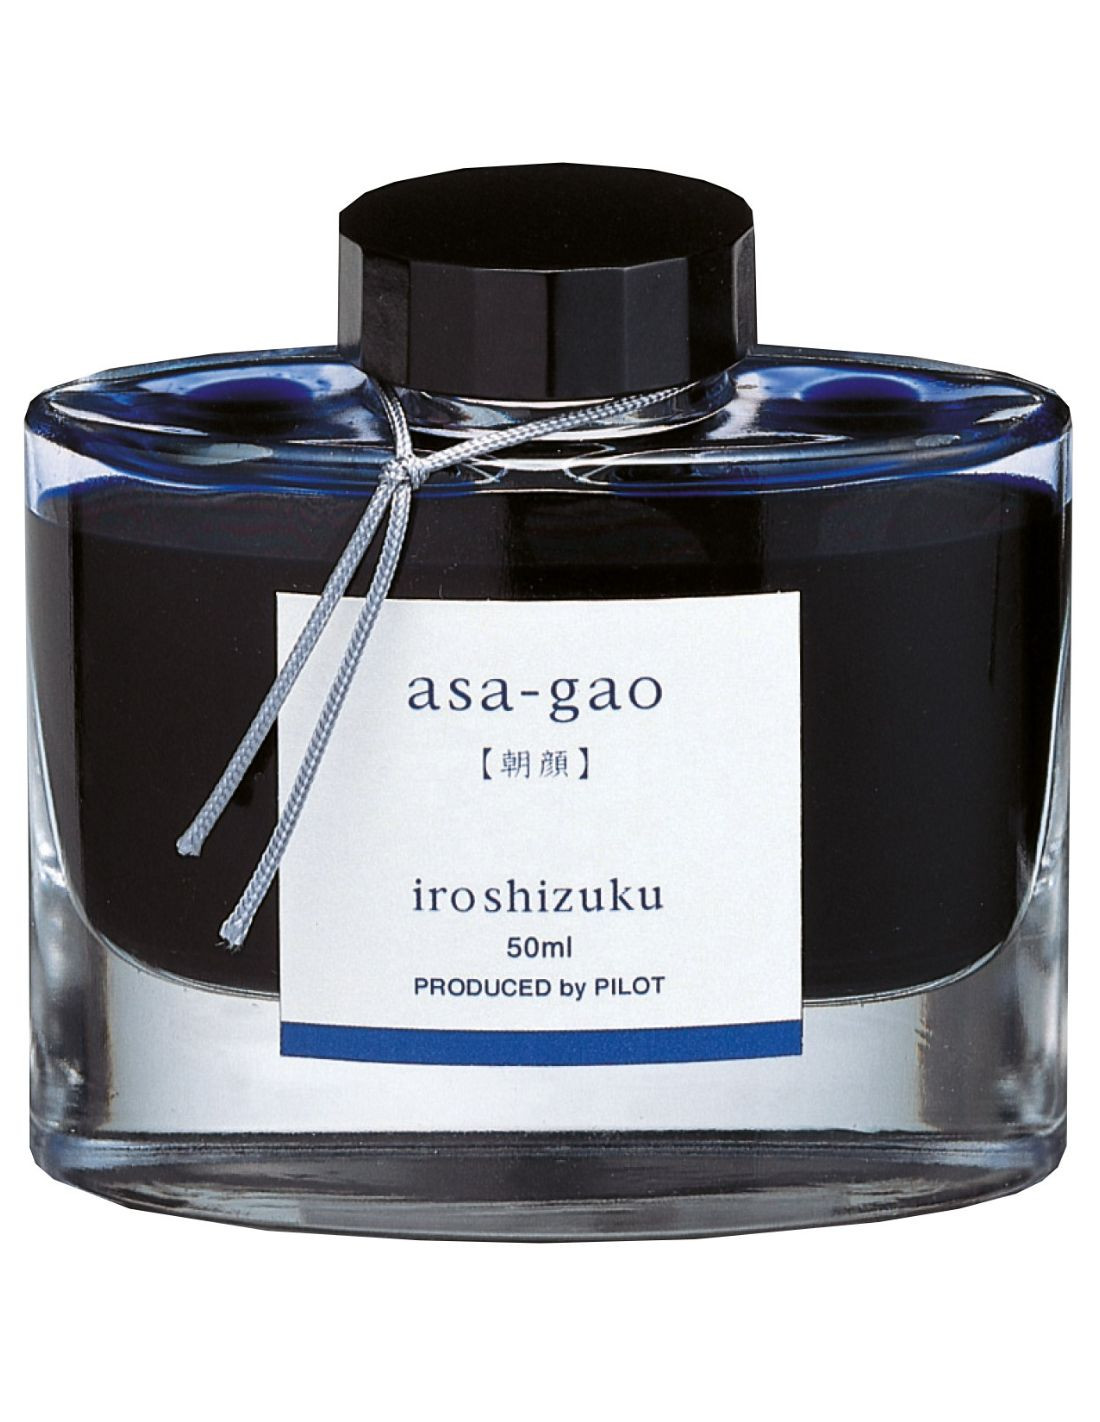 Iroshizuku Ink - Bottle 50ml - Asa-gao - Pilot